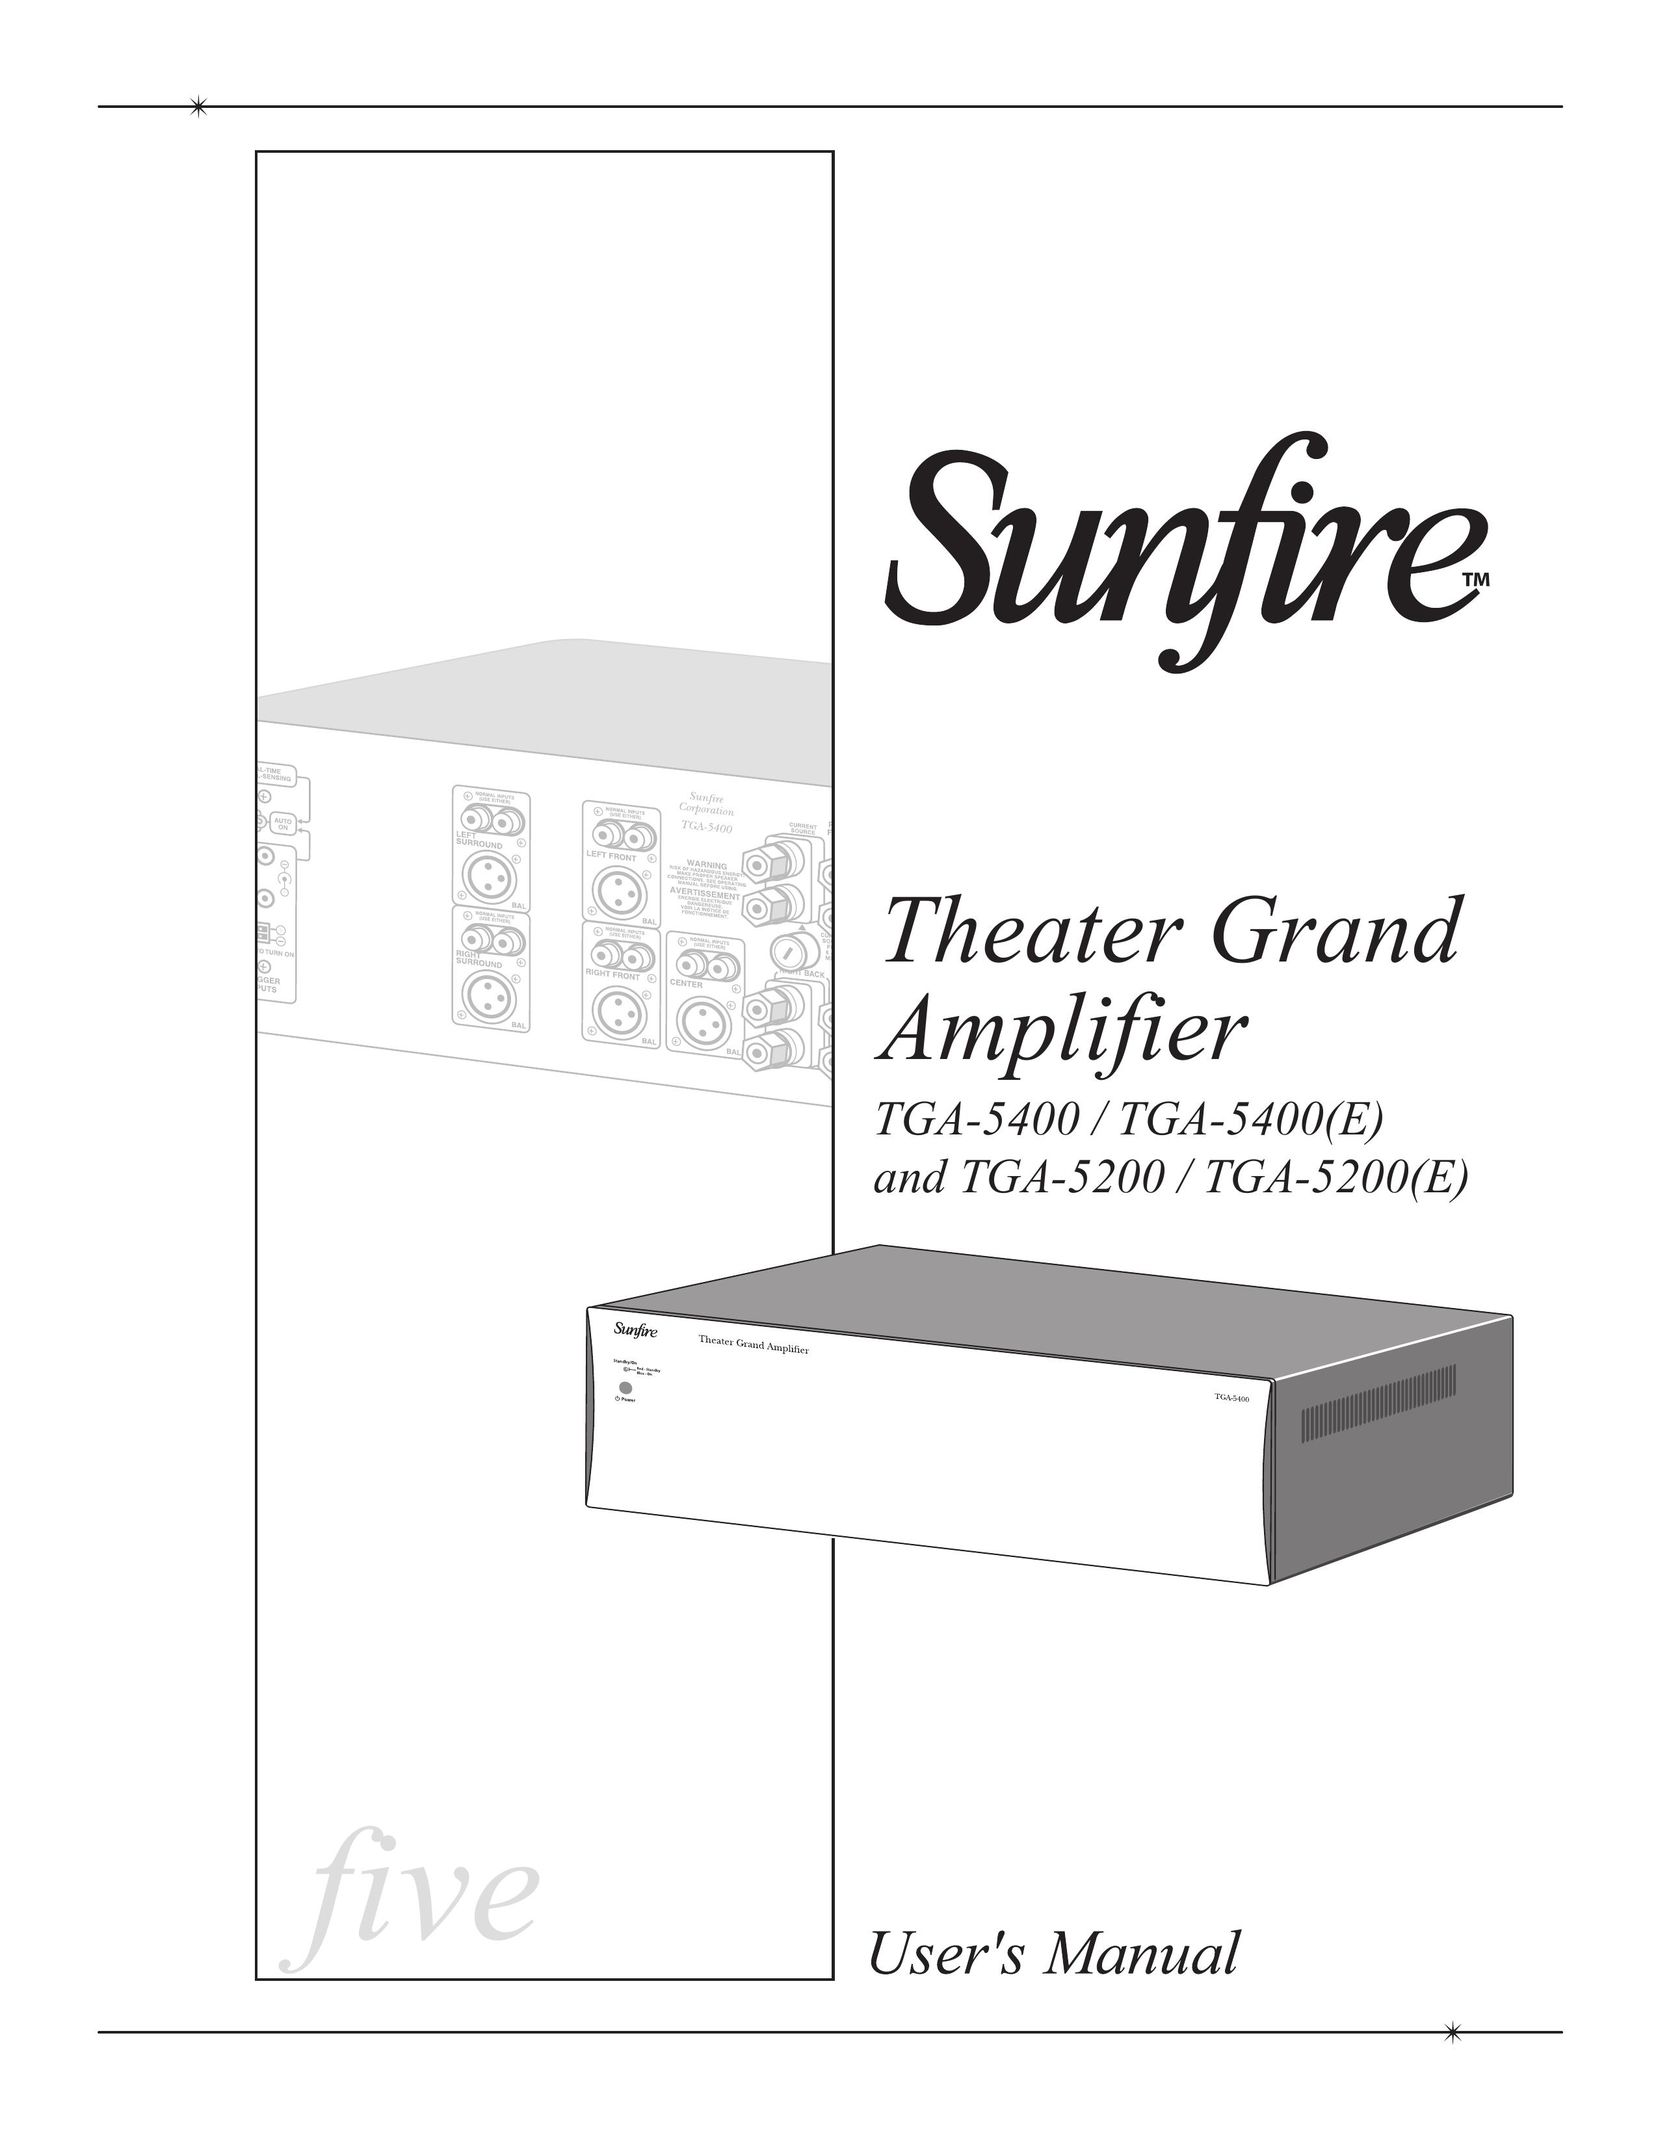 Sunfire TGA-5200(E) Stereo Amplifier User Manual